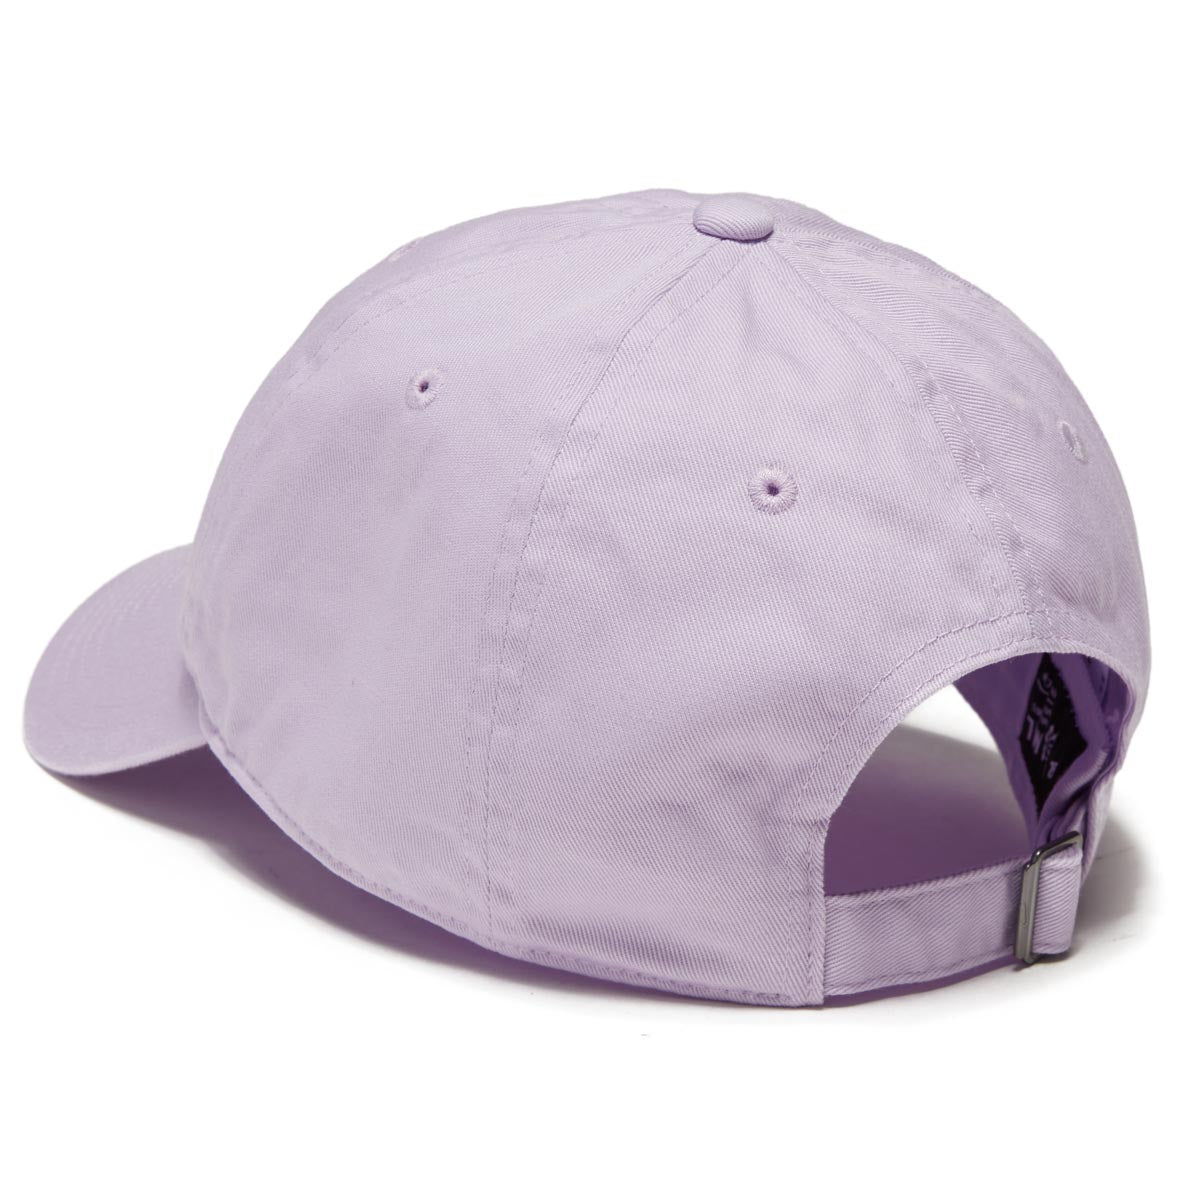 Nike SB Futbol Club Hat - Violet Mist/White image 2